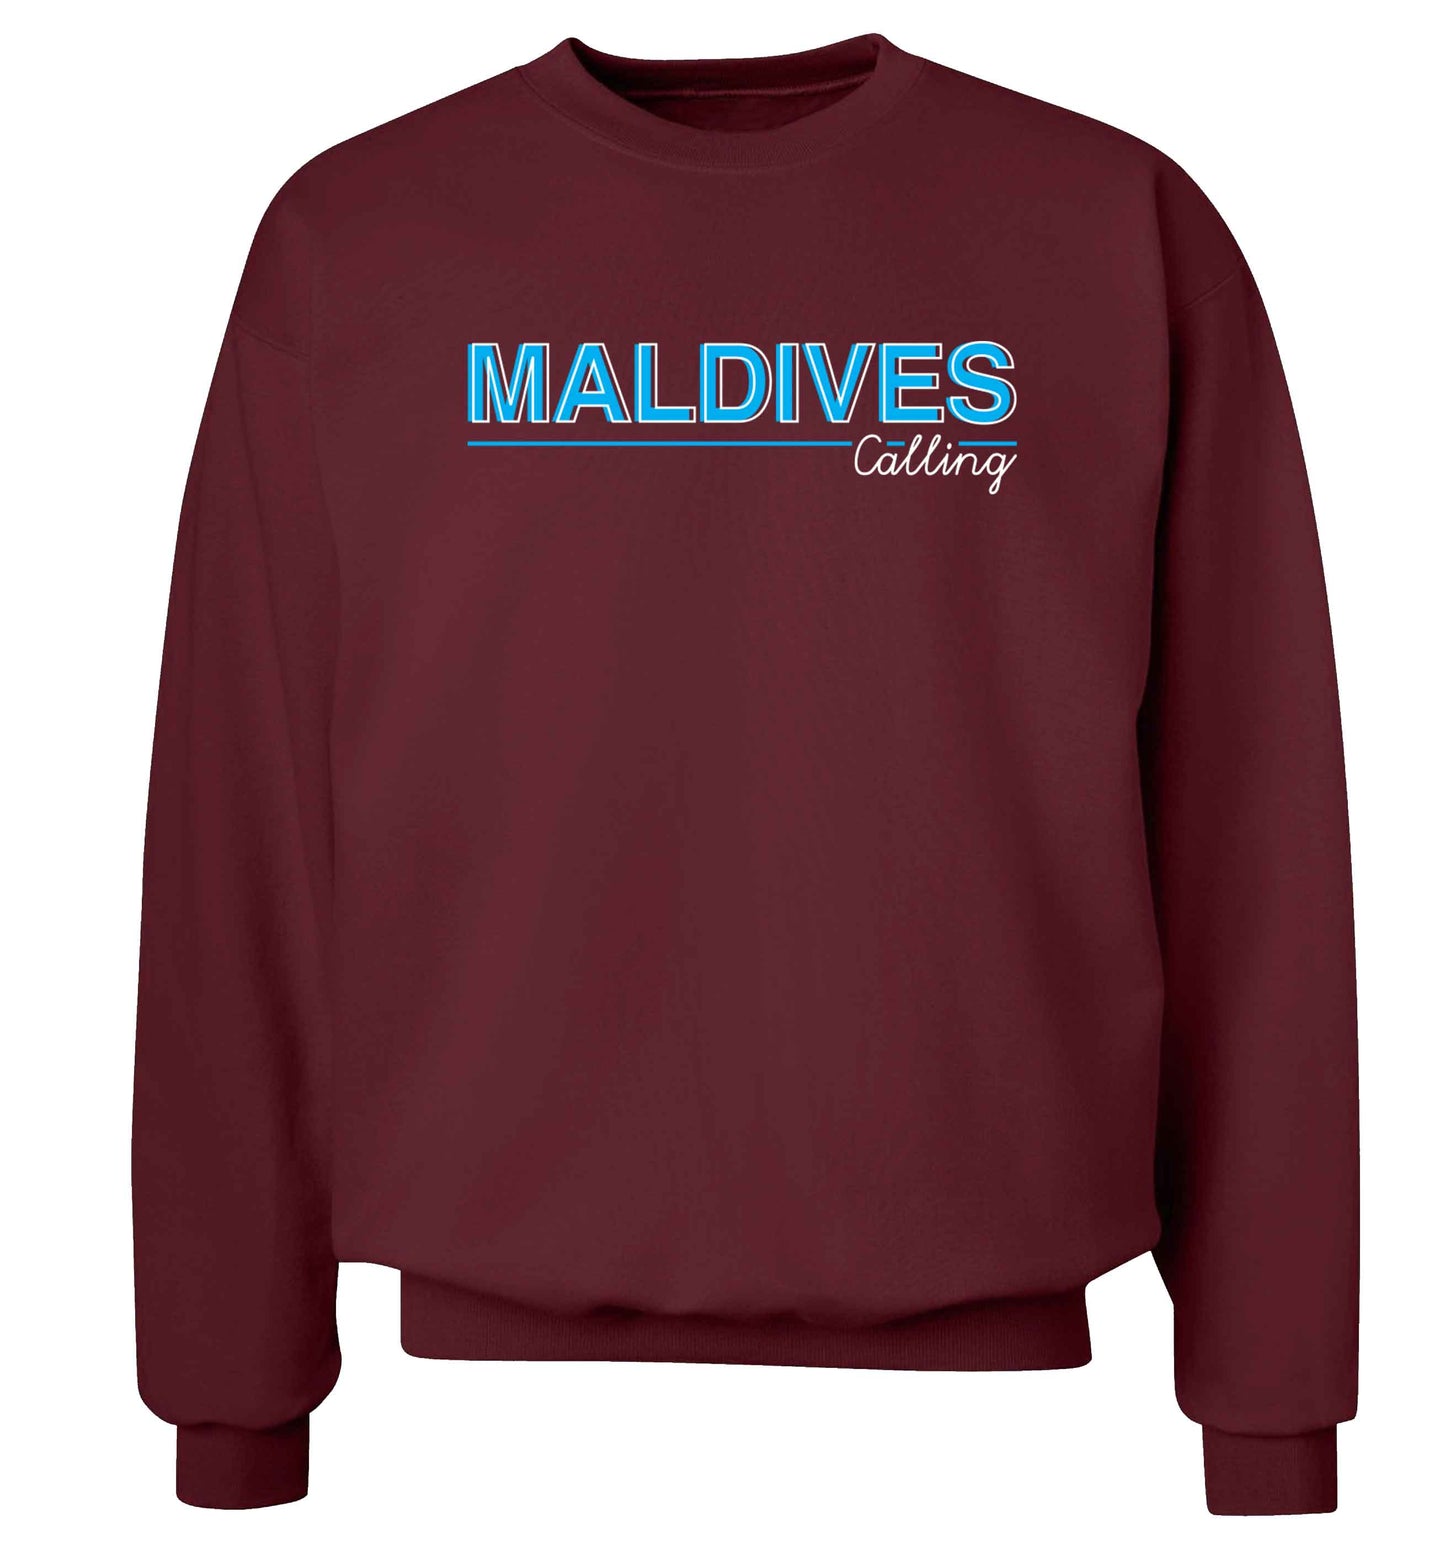 Maldives calling Adult's unisex maroon Sweater 2XL